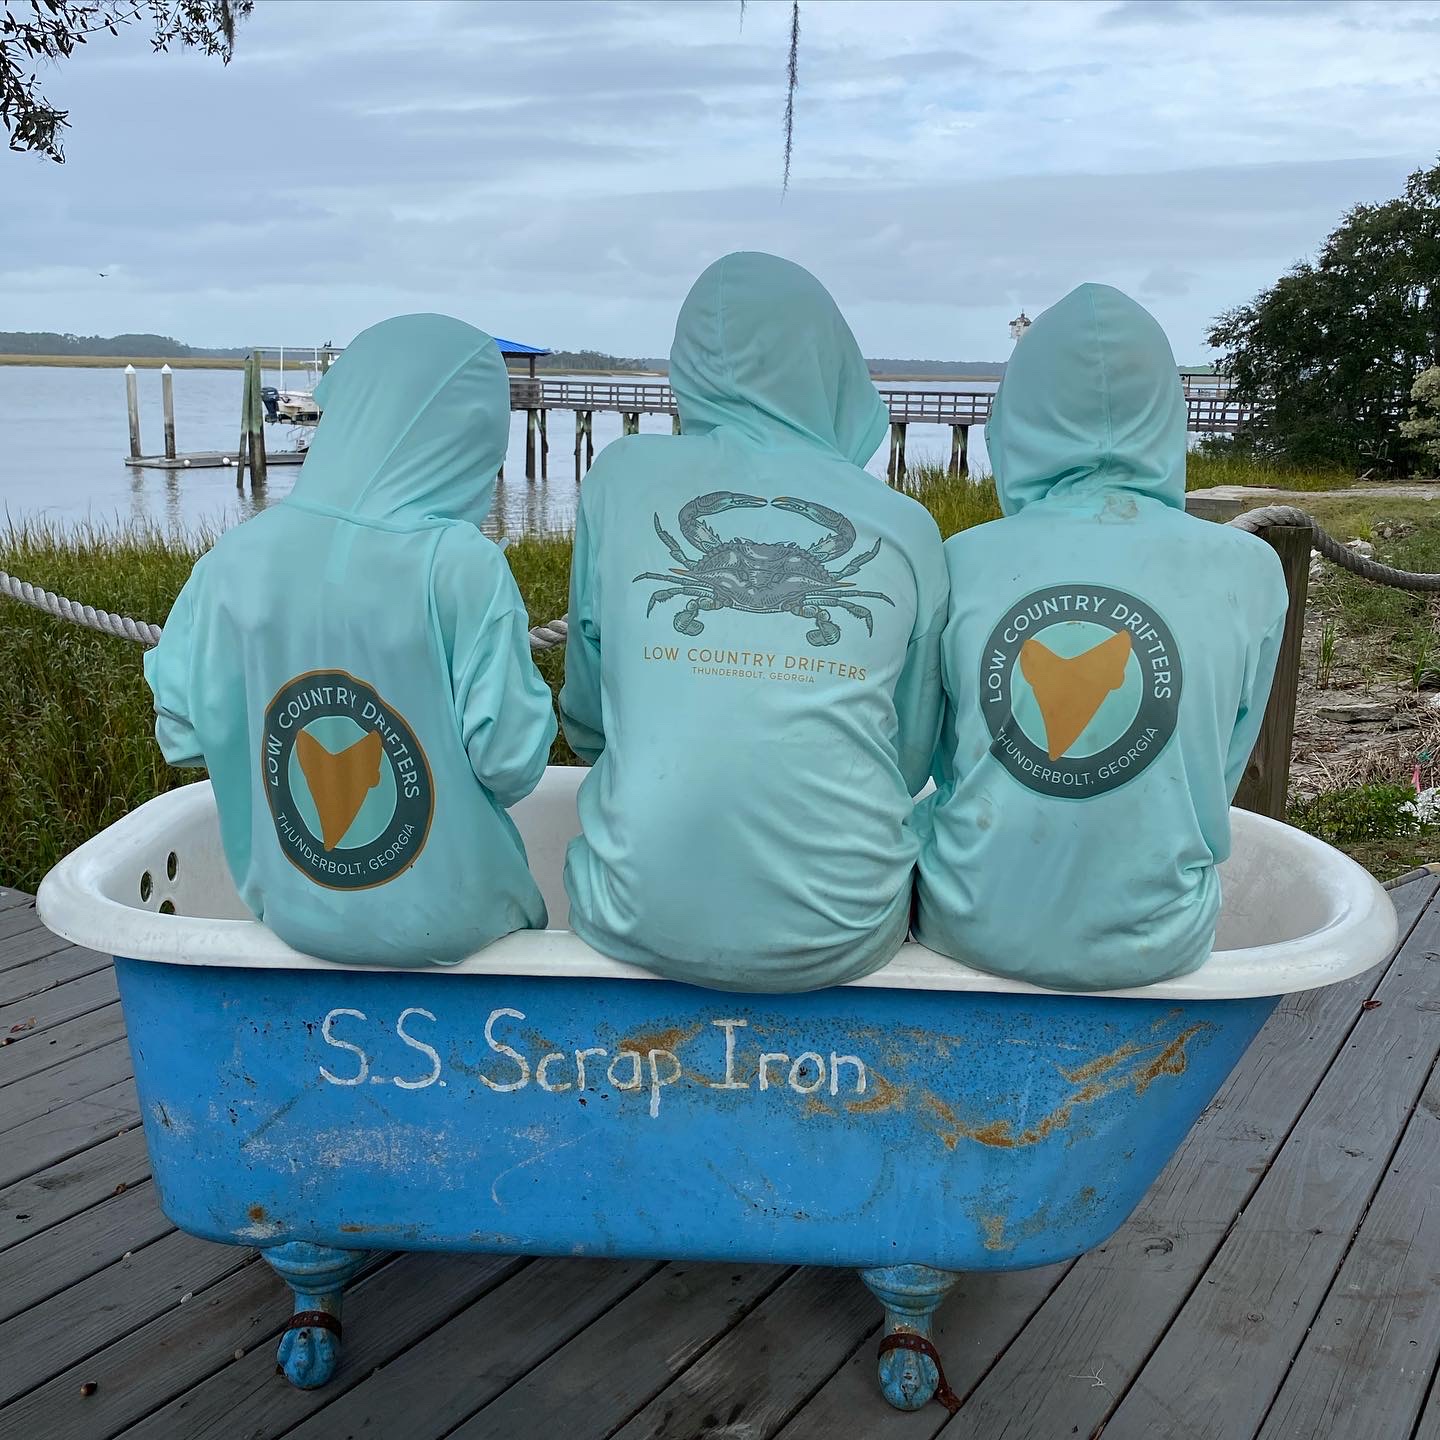 S.S. Scrap Iron, Daufuskie Island, Low Country Drifters - South Carolina